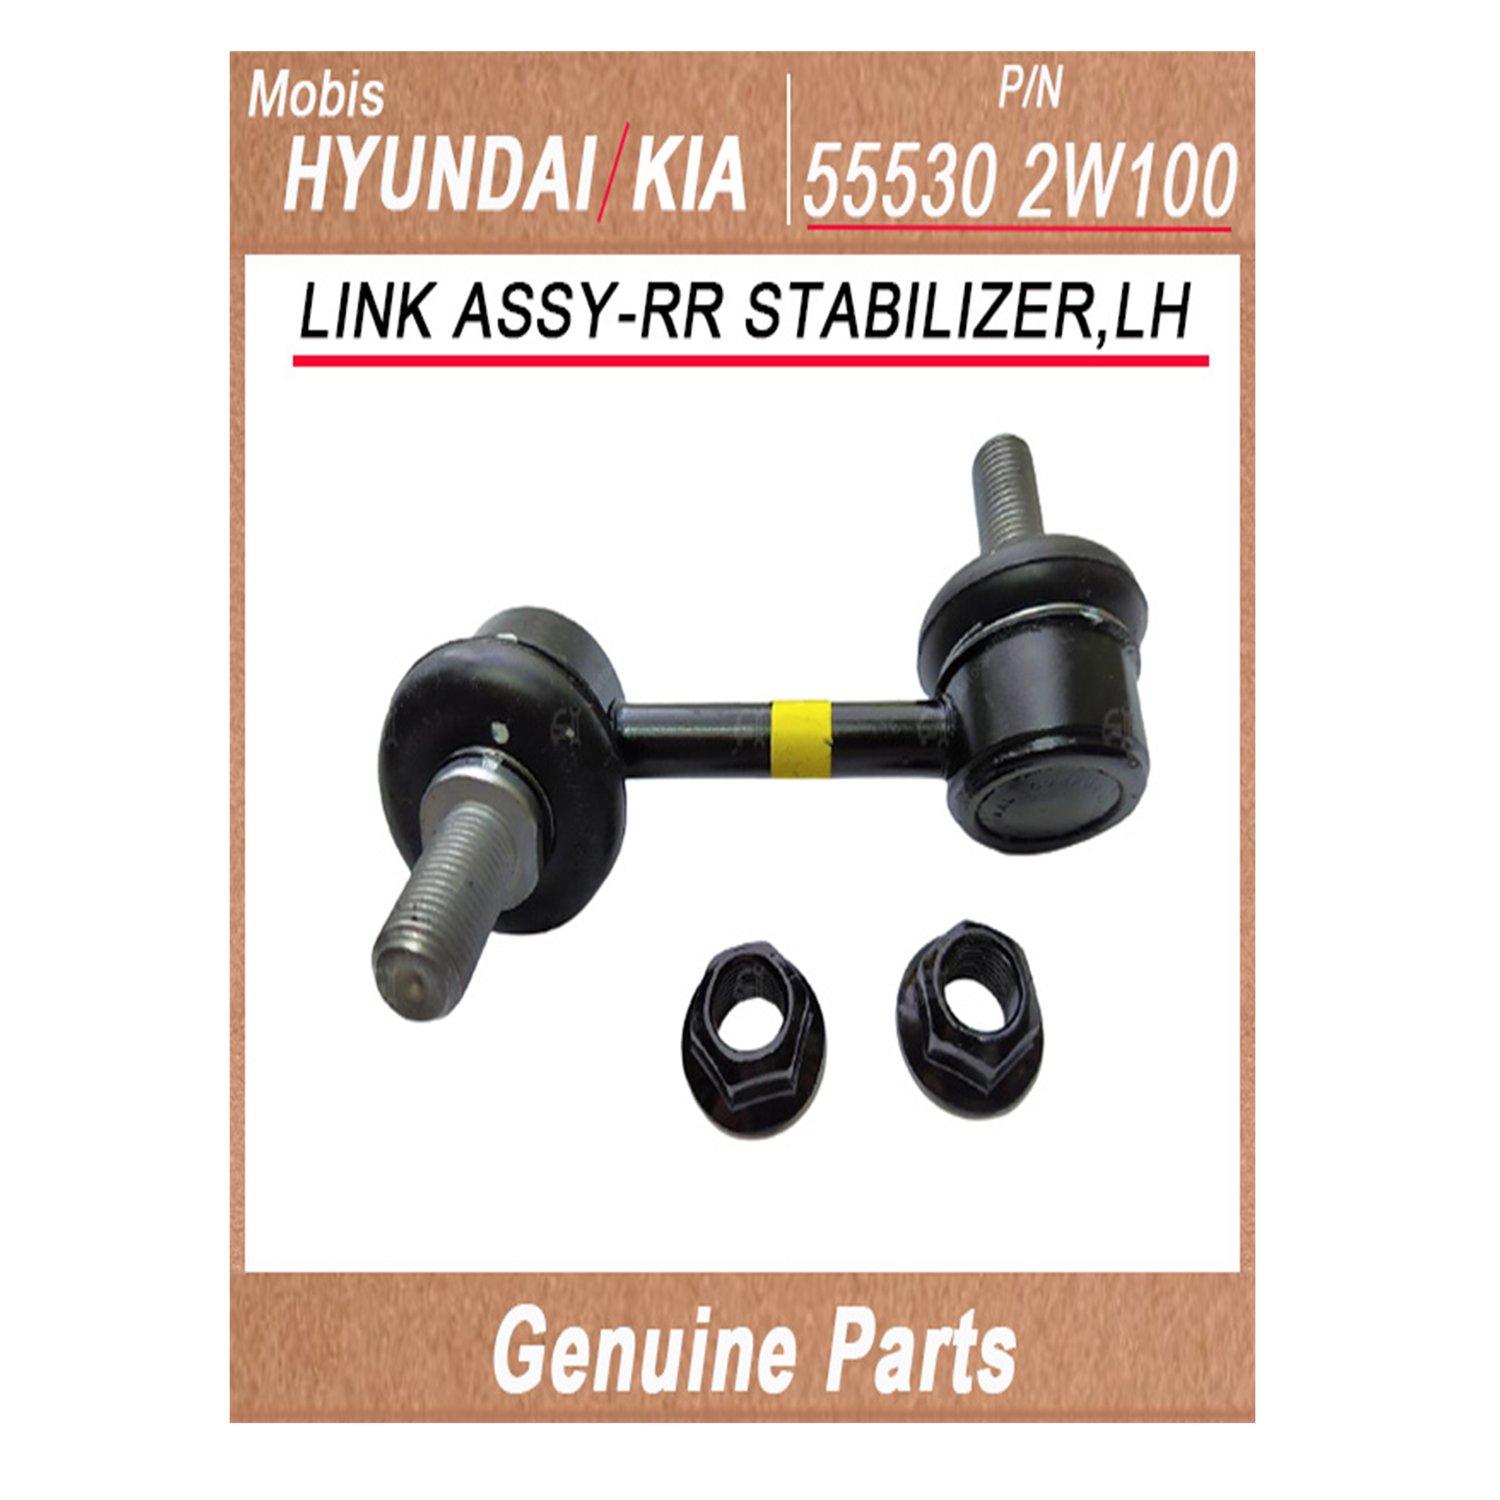 555302W100 _ LINK ASSY_RR STABILIZER_LH _ Genuine Korean Automotive Spare Parts _ Hyundai Kia _Mobis